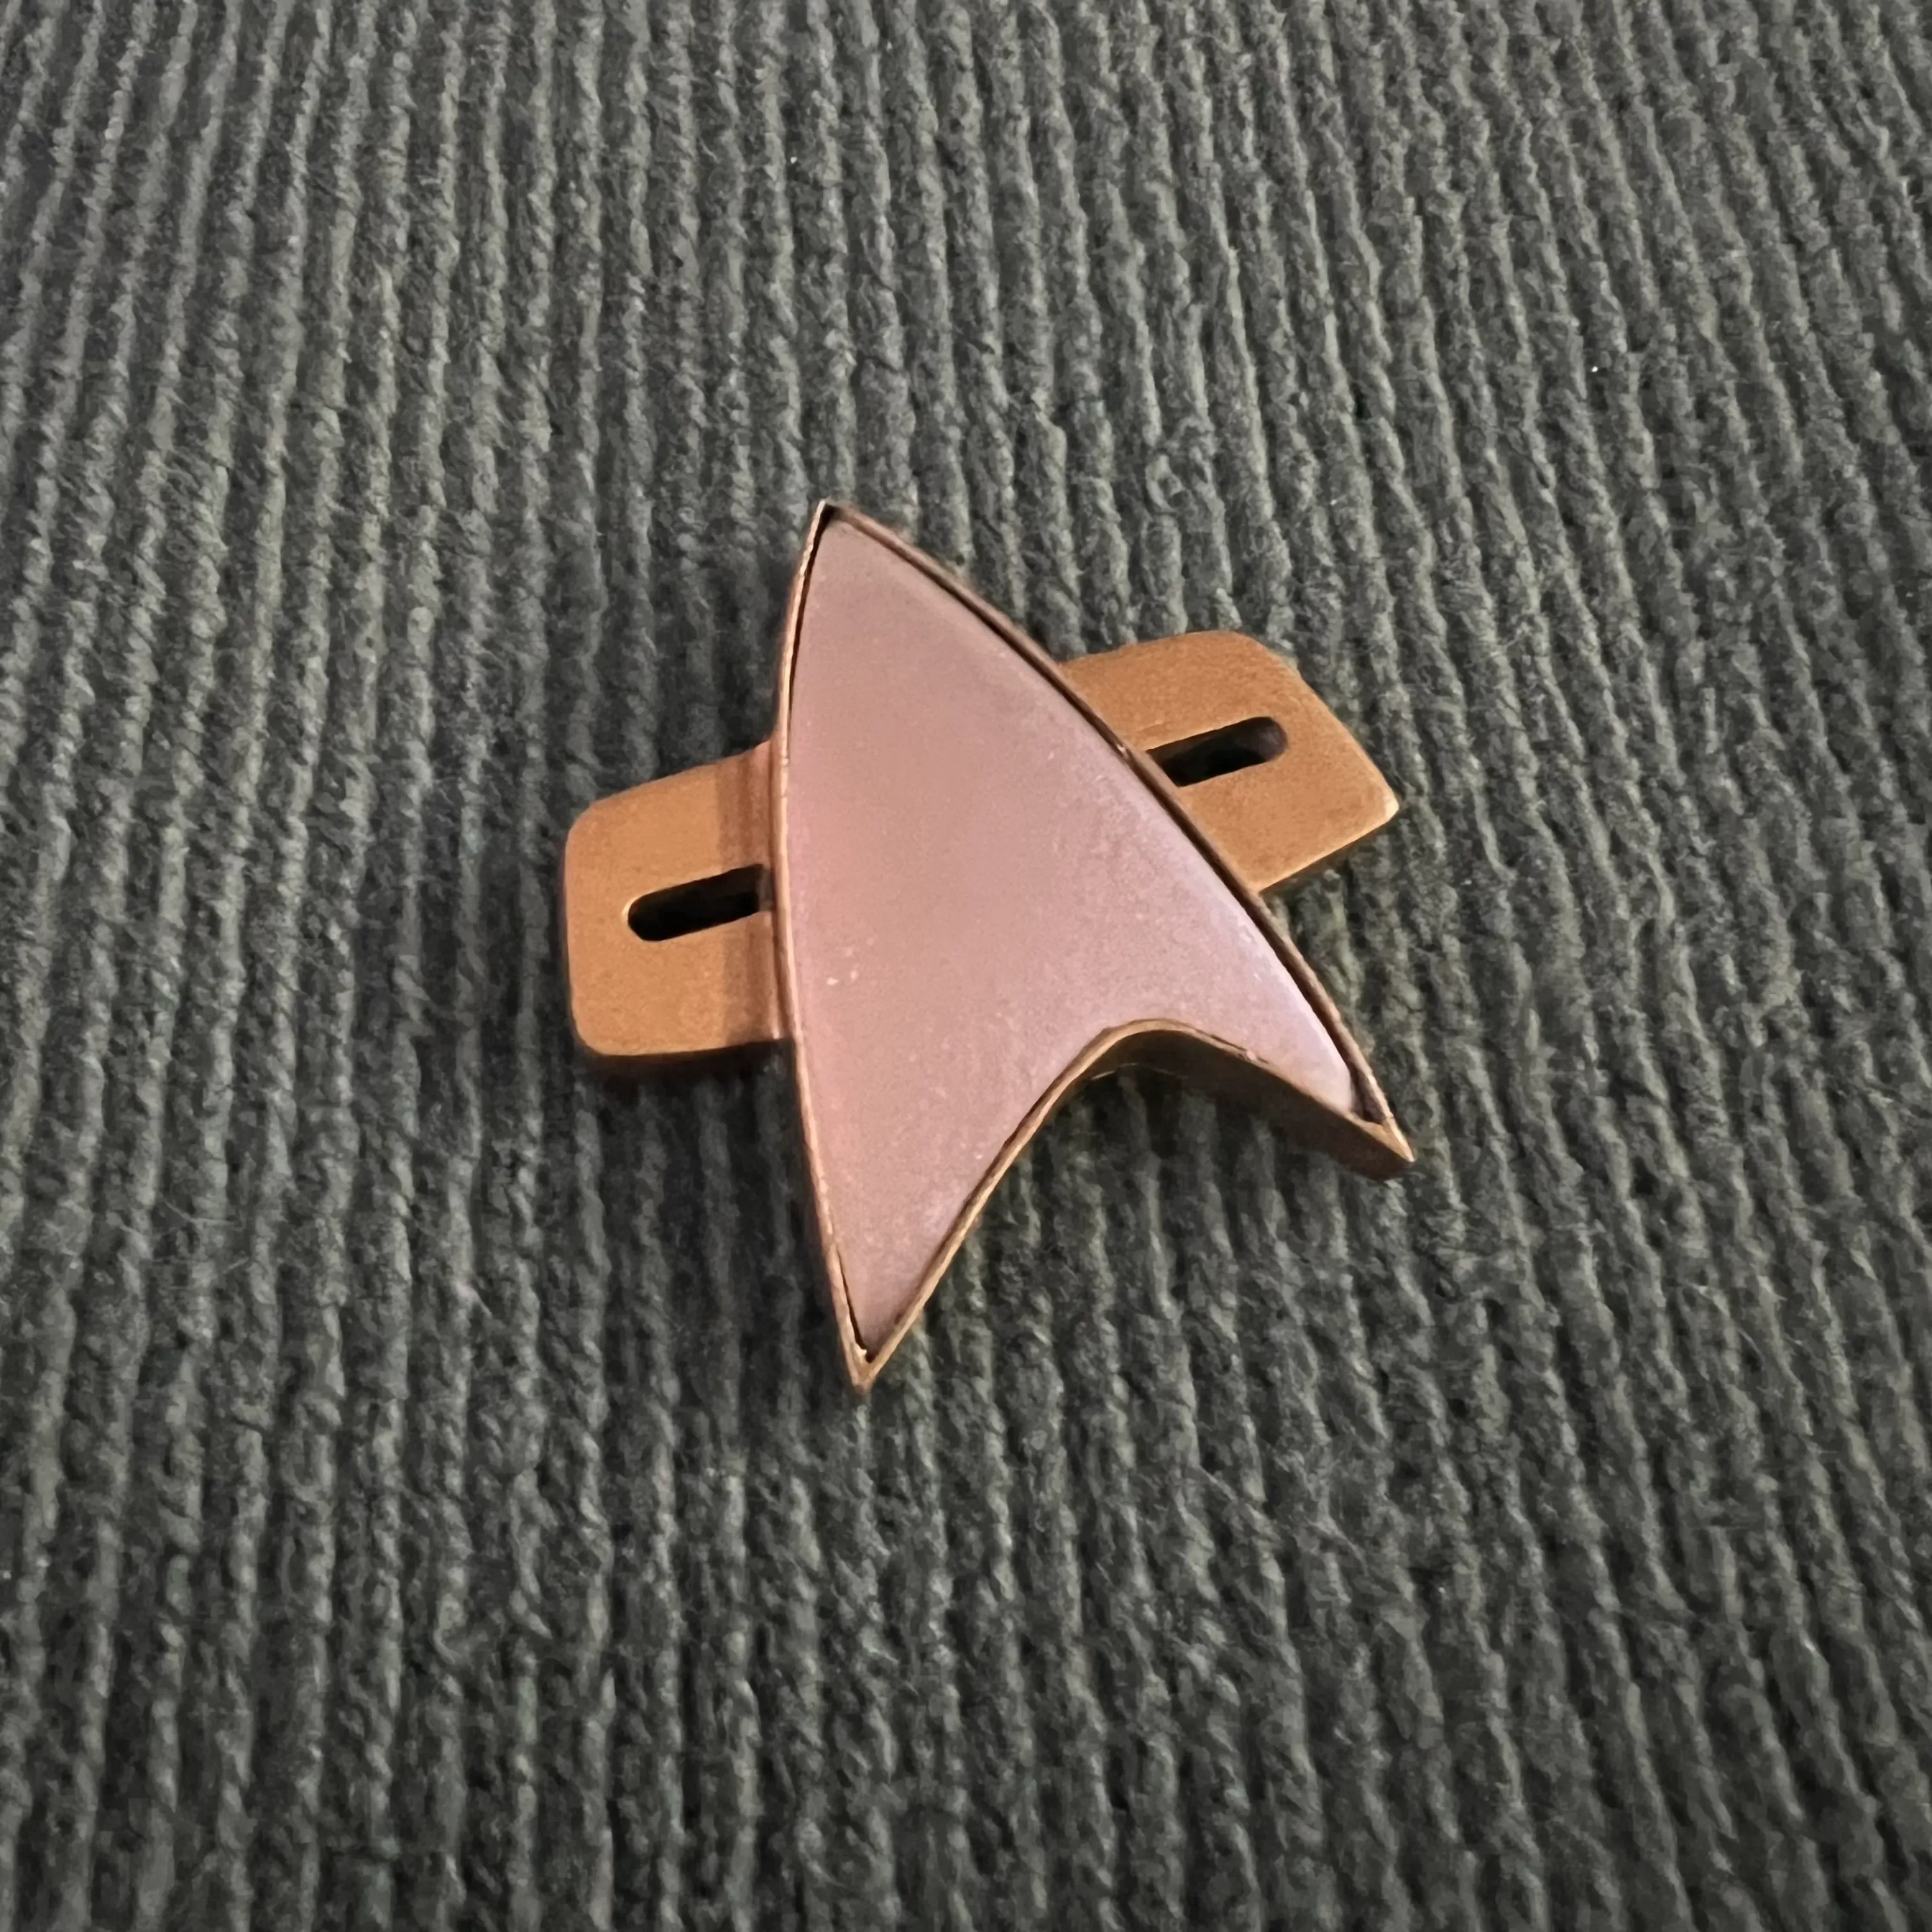 Star Trek Picard/Voyager Comm Badge